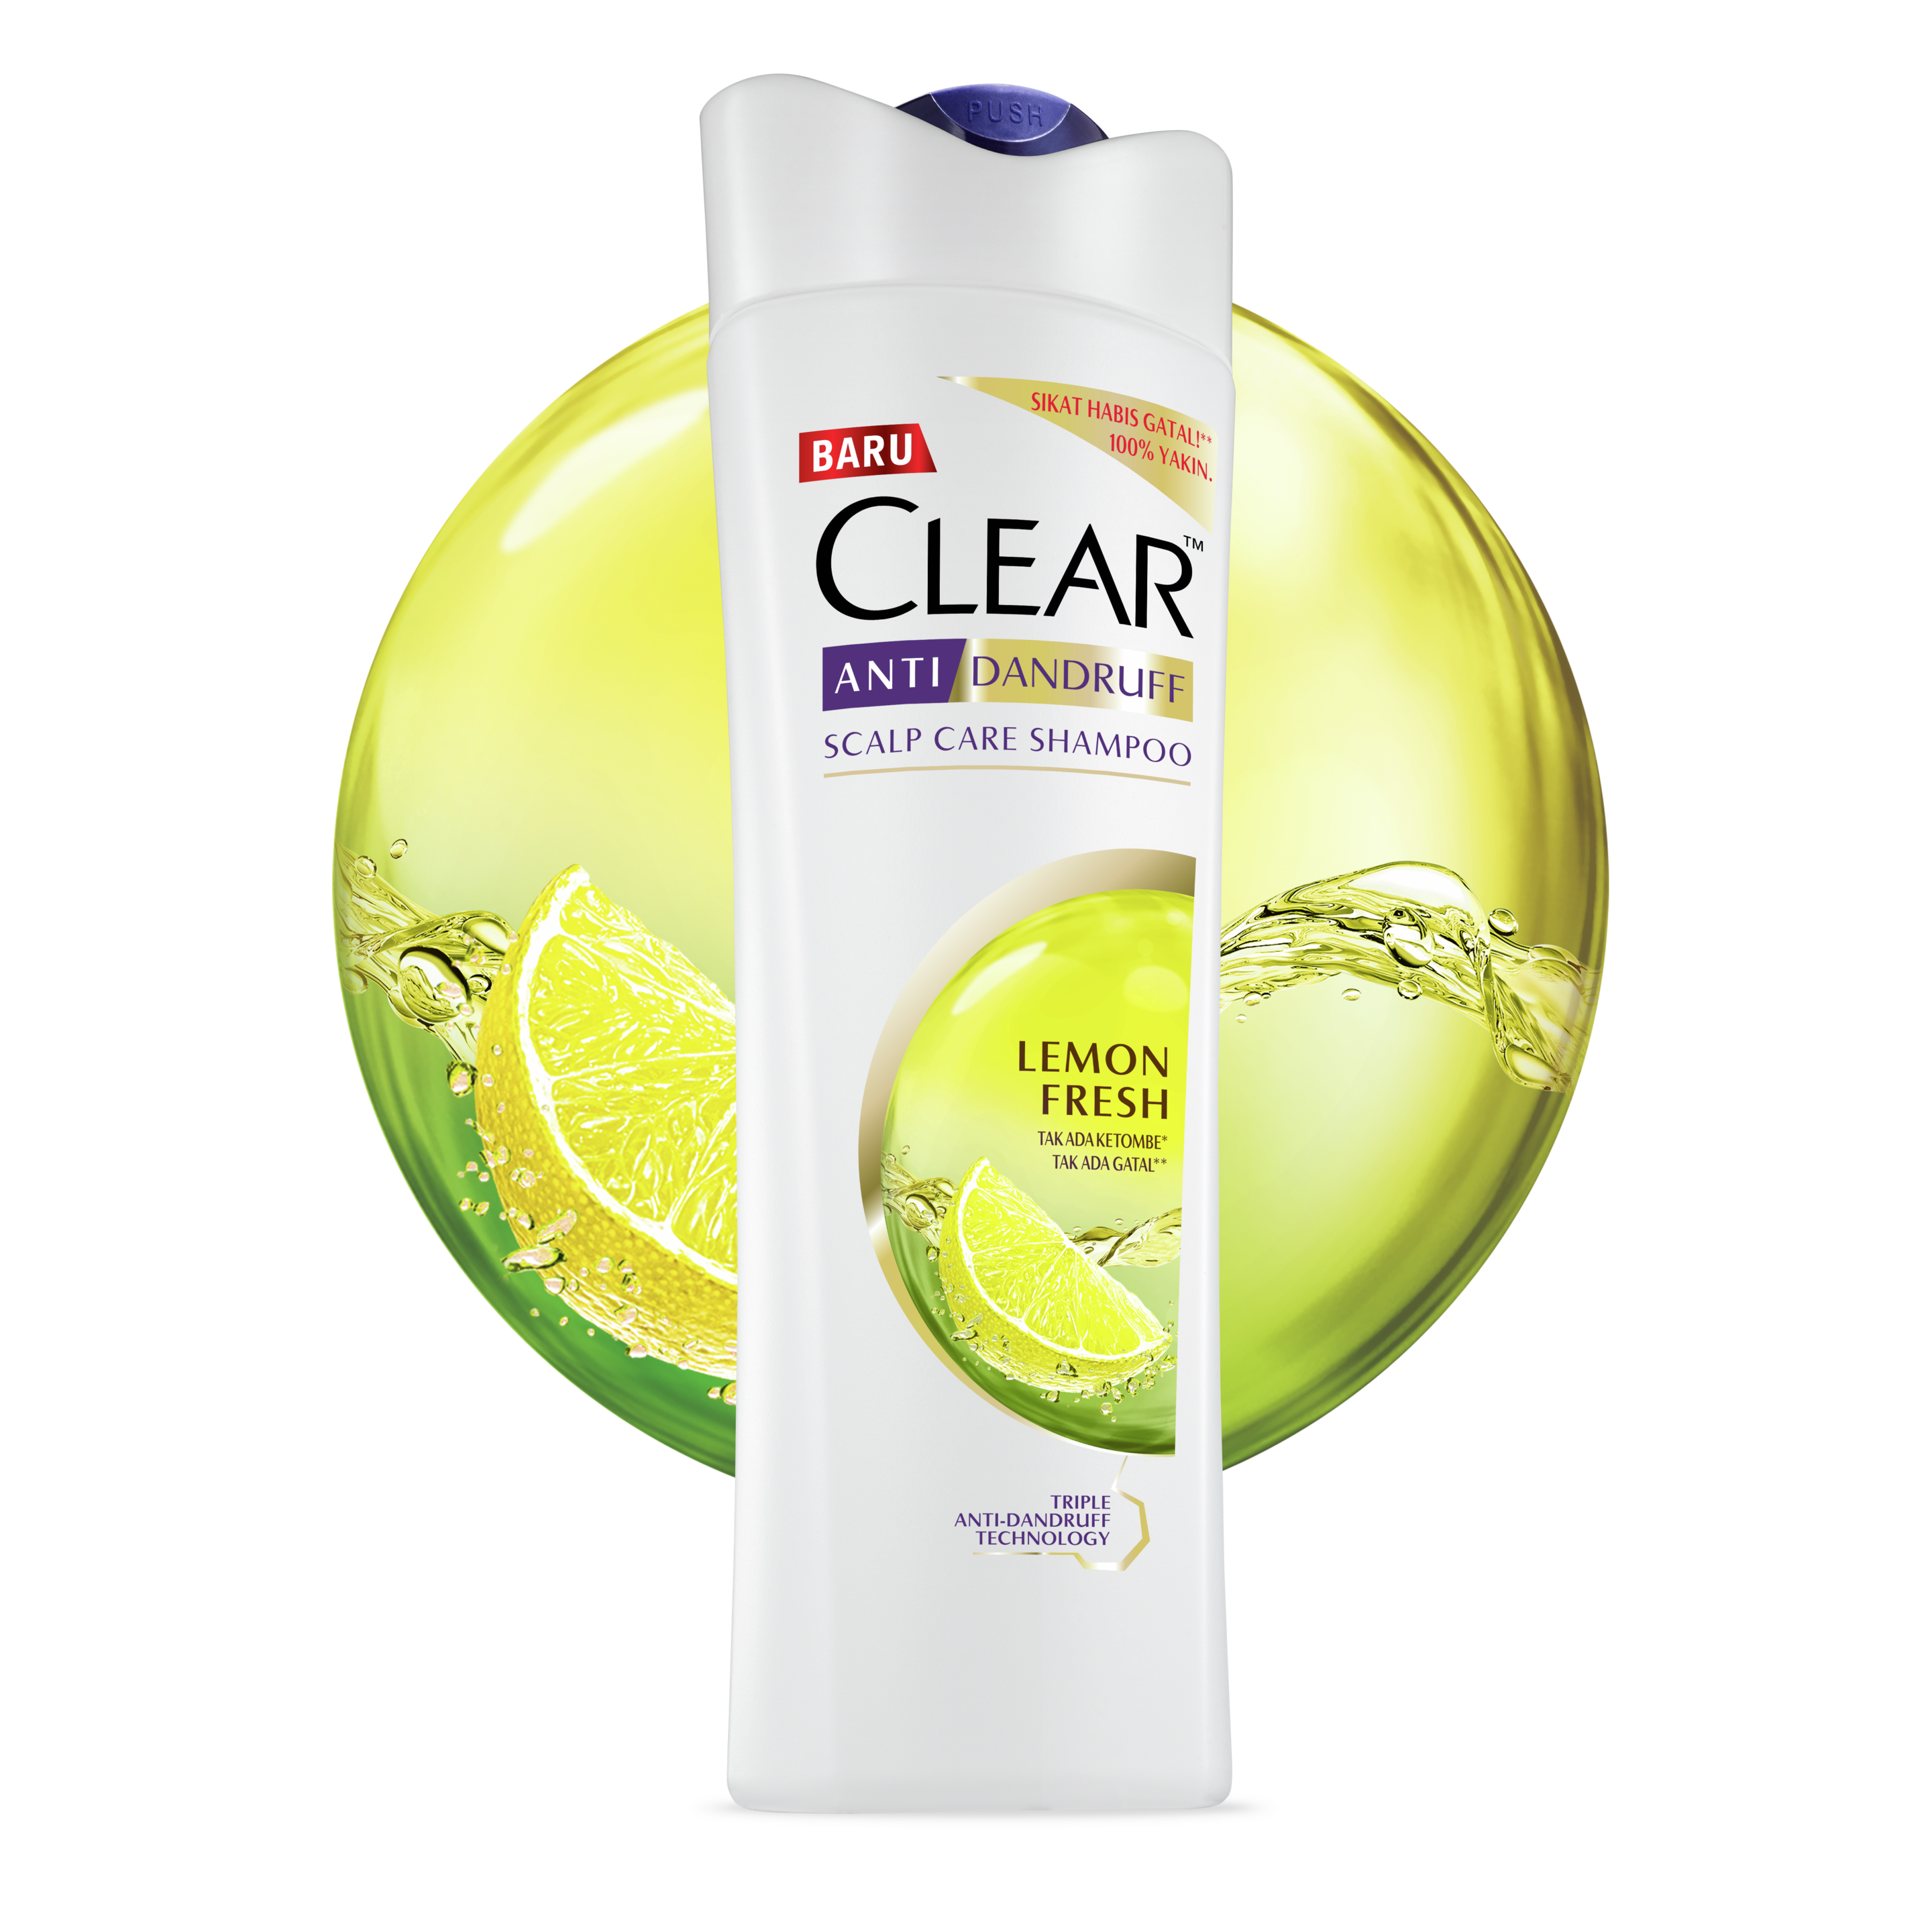 CLEAR Fresh Cool Lemon Sampo 320 ml gambar depan kemasan